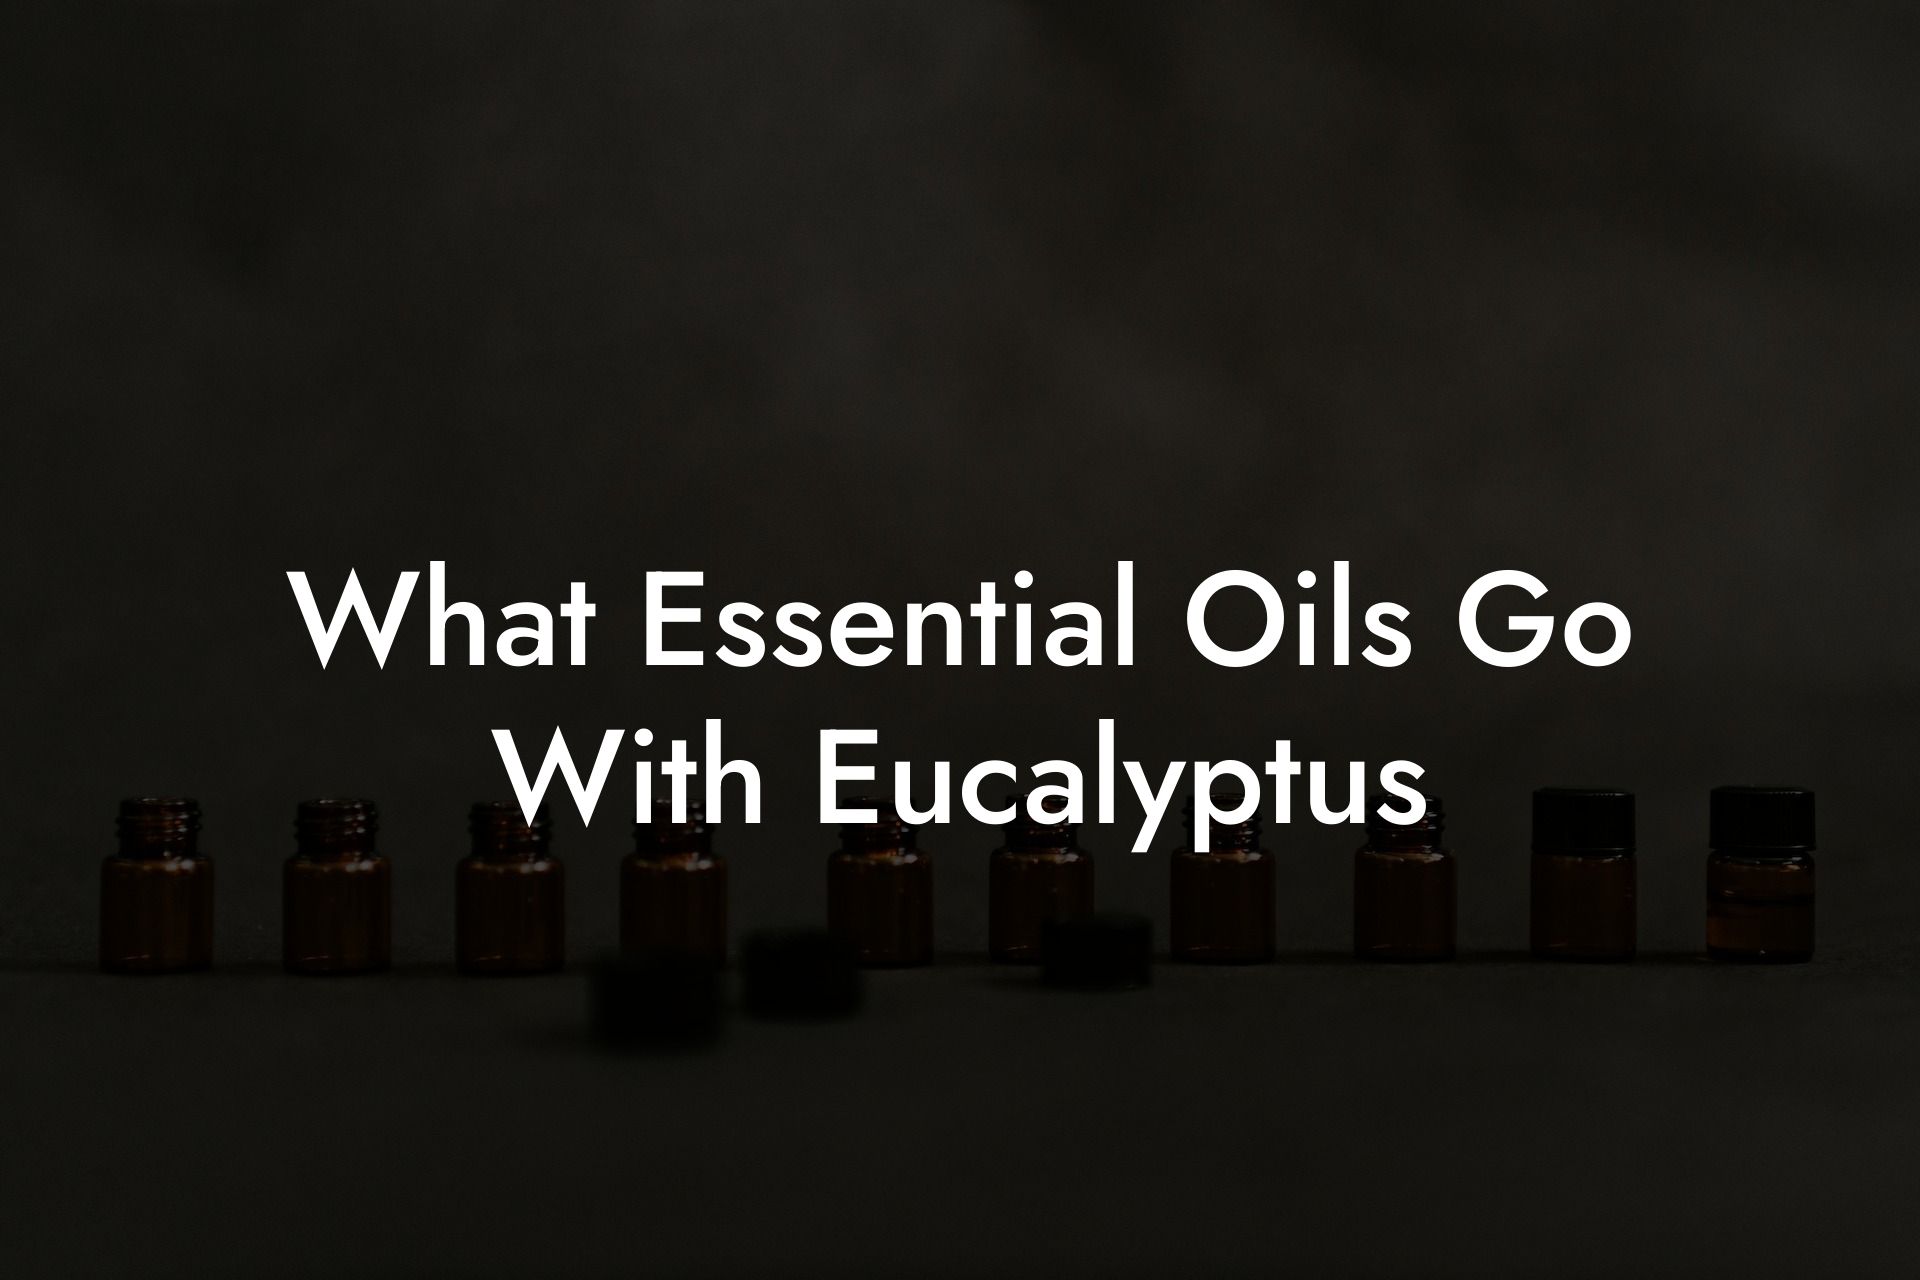 What Essential Oils Go With Eucalyptus